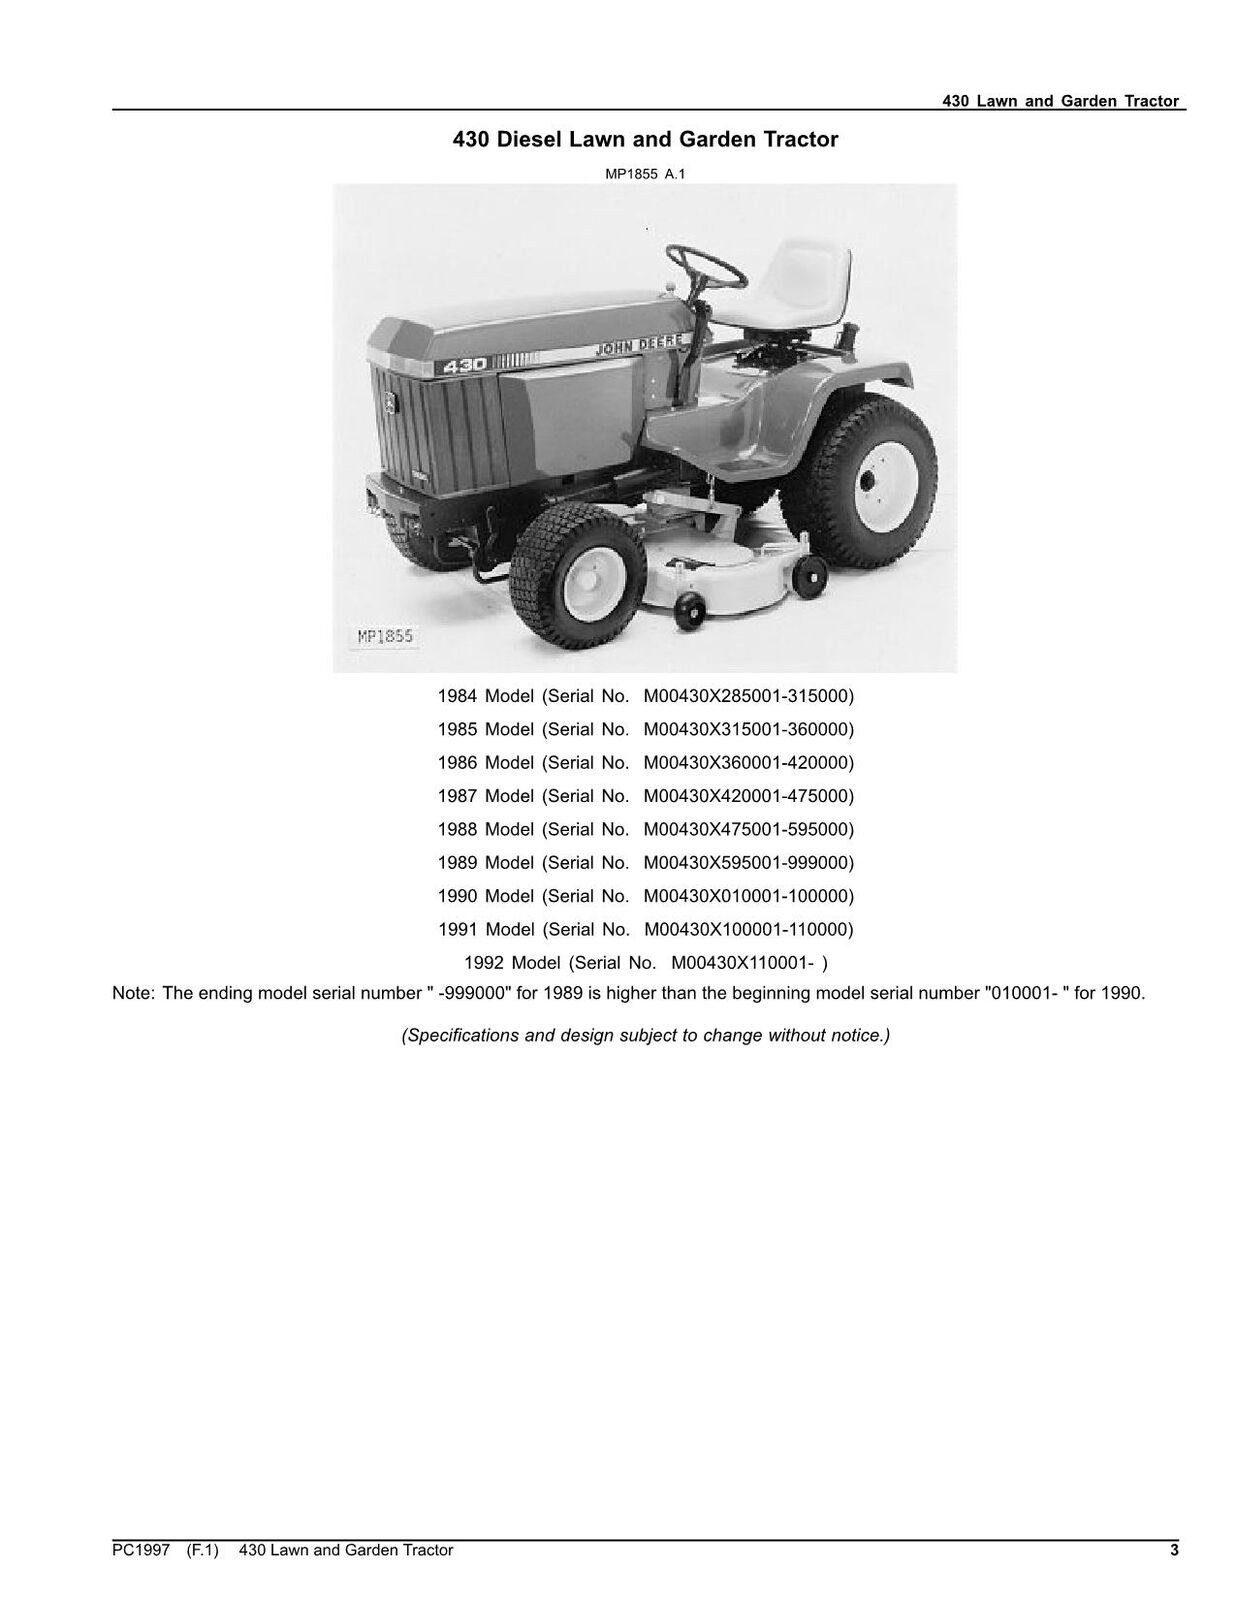 John Deere 430 Tractor Parts Catalog